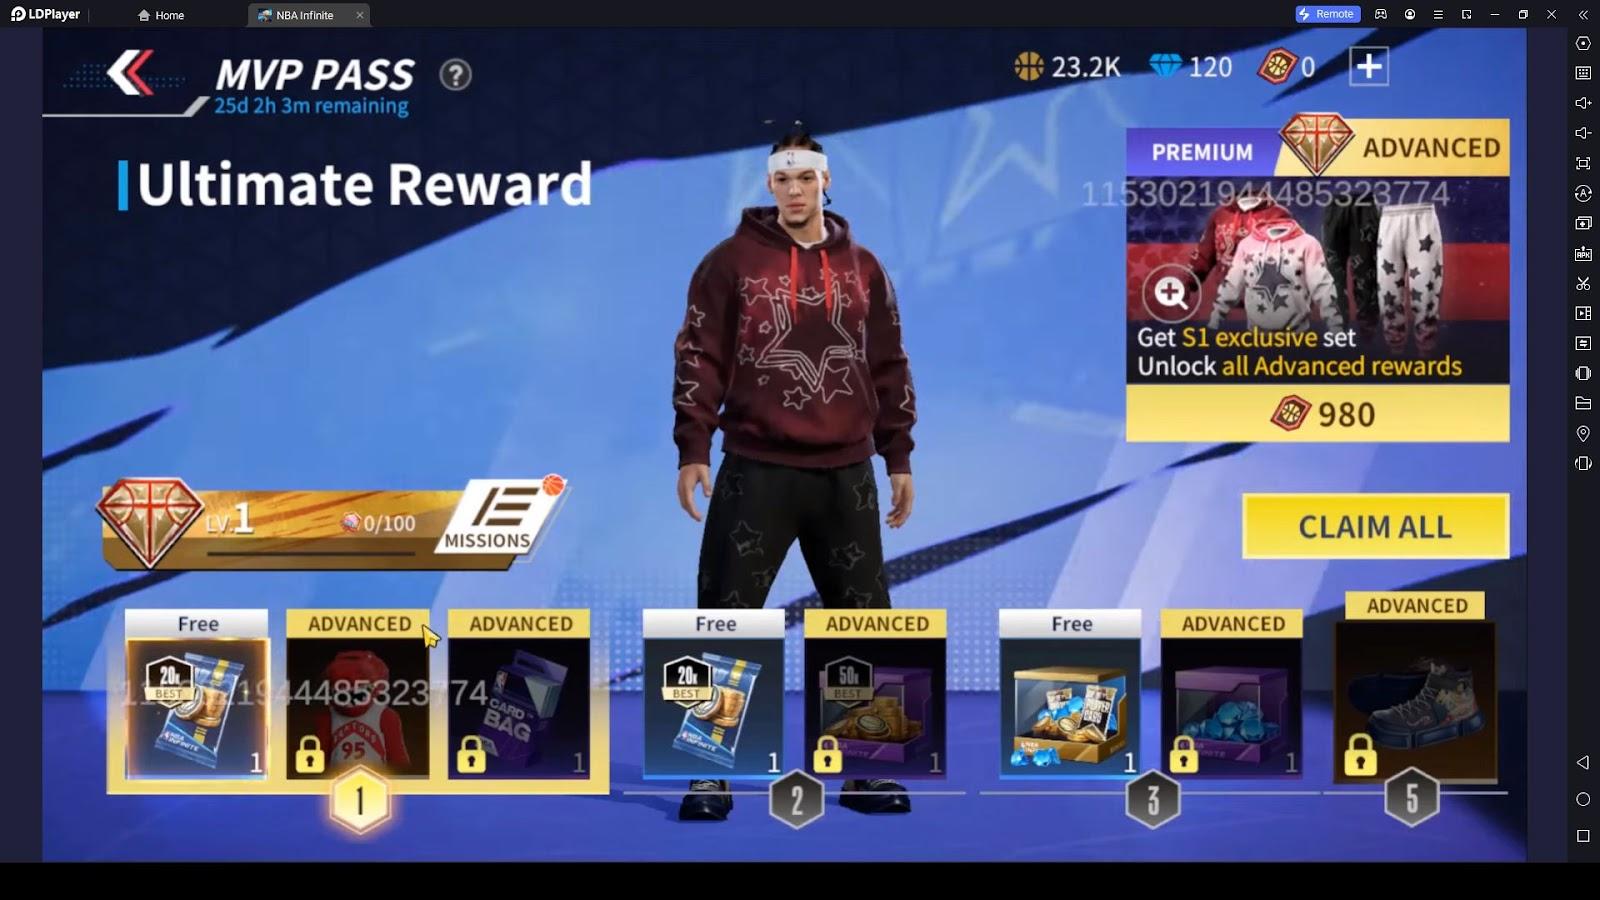 Get More Rewards through MVP Pass